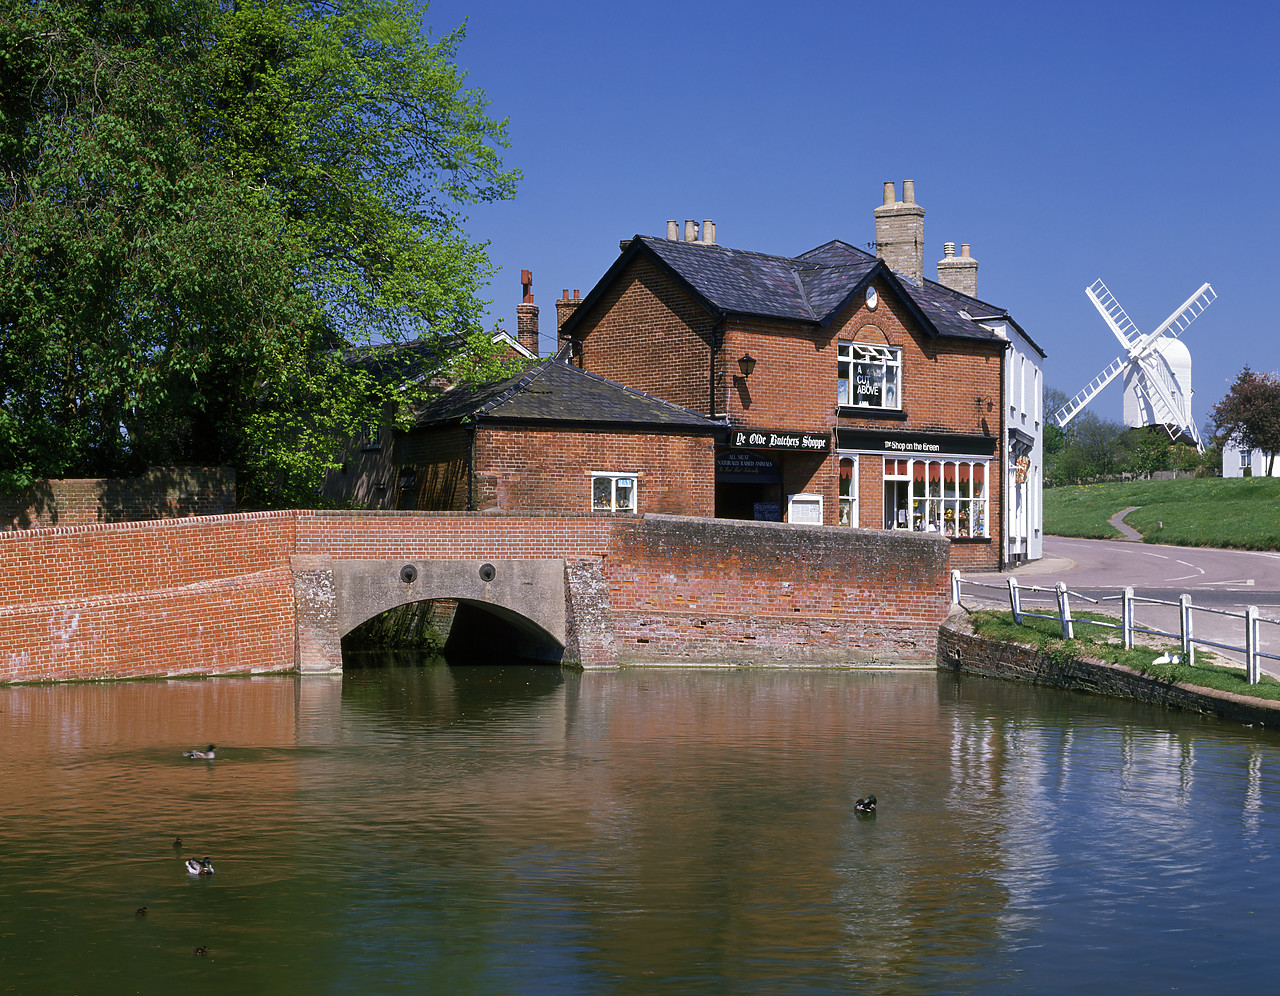 #902848 - Village Pond, Finchingfield, Essex, England